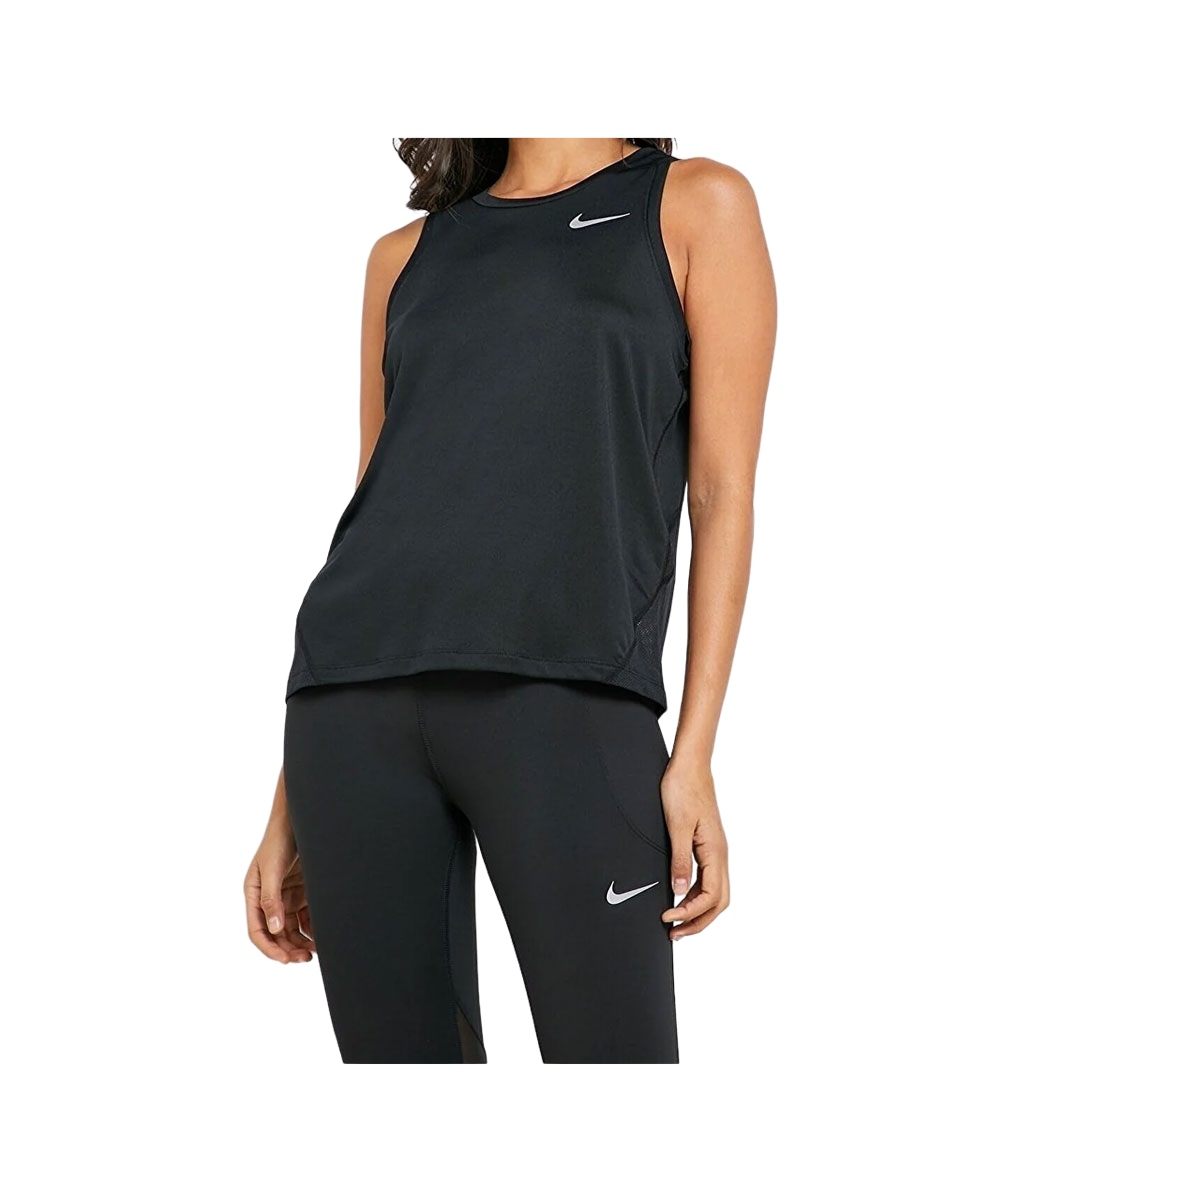 Nike Women's Dri-FIT Sleeveless Tank